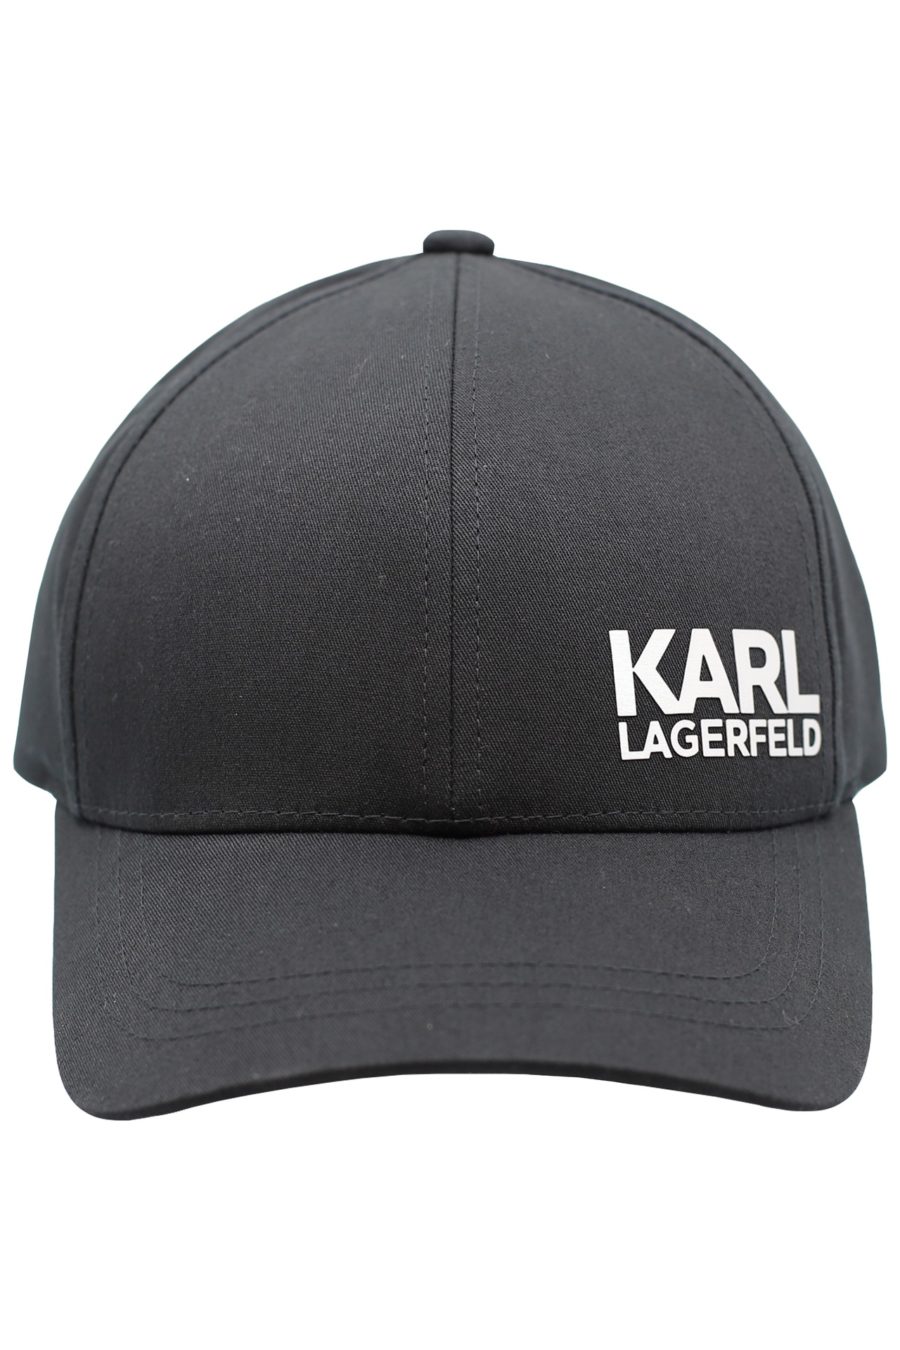 Gorra negra con logo plateado "Karl Legerfeld" - 61516552651bc6007a5c440520d4b1d8148ba98b